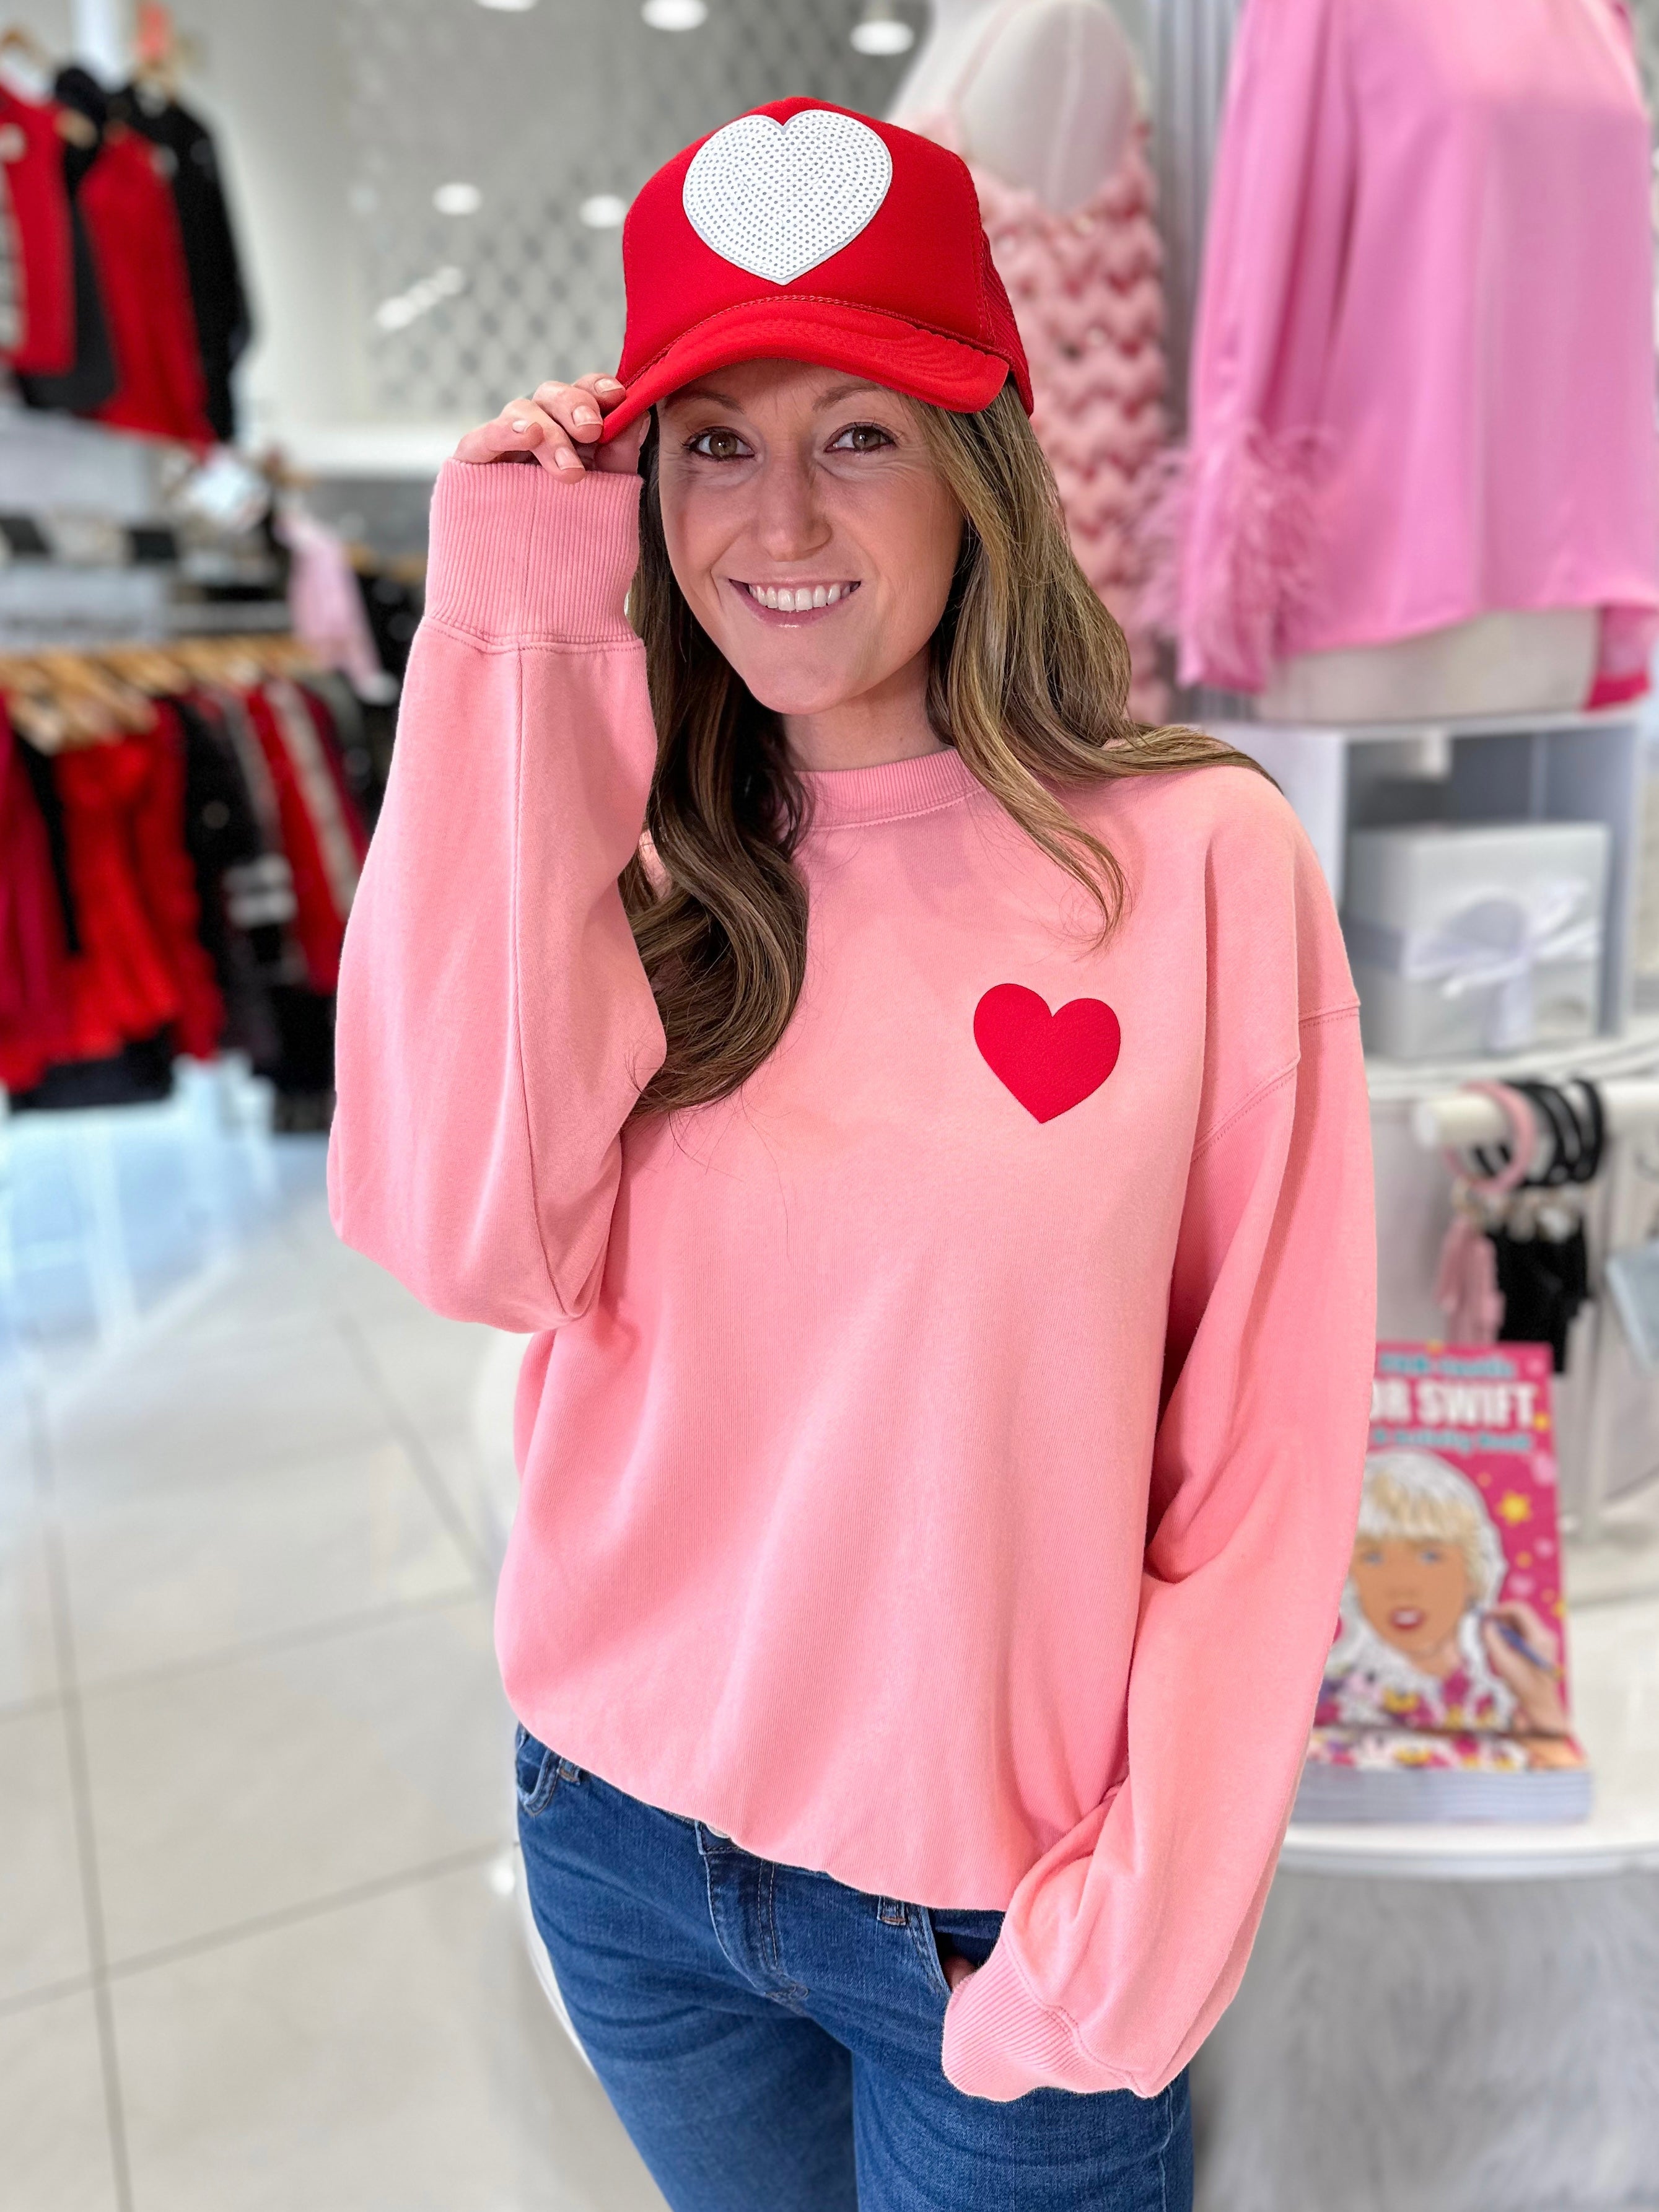 Pink Puff Heart Sweatshirt